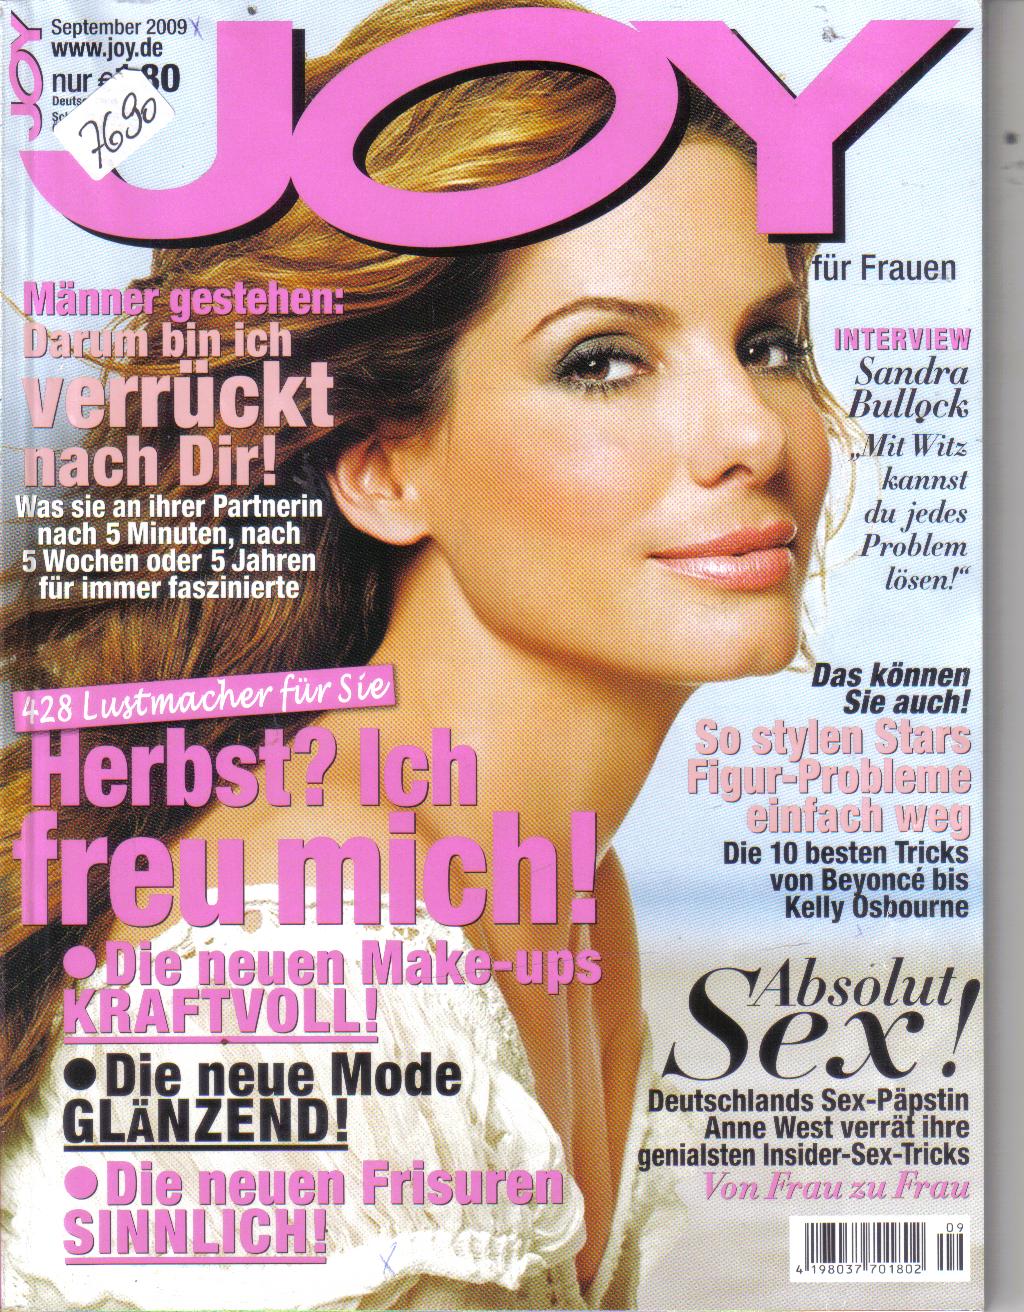 Joy Magazin fuer Frauen  September 2009